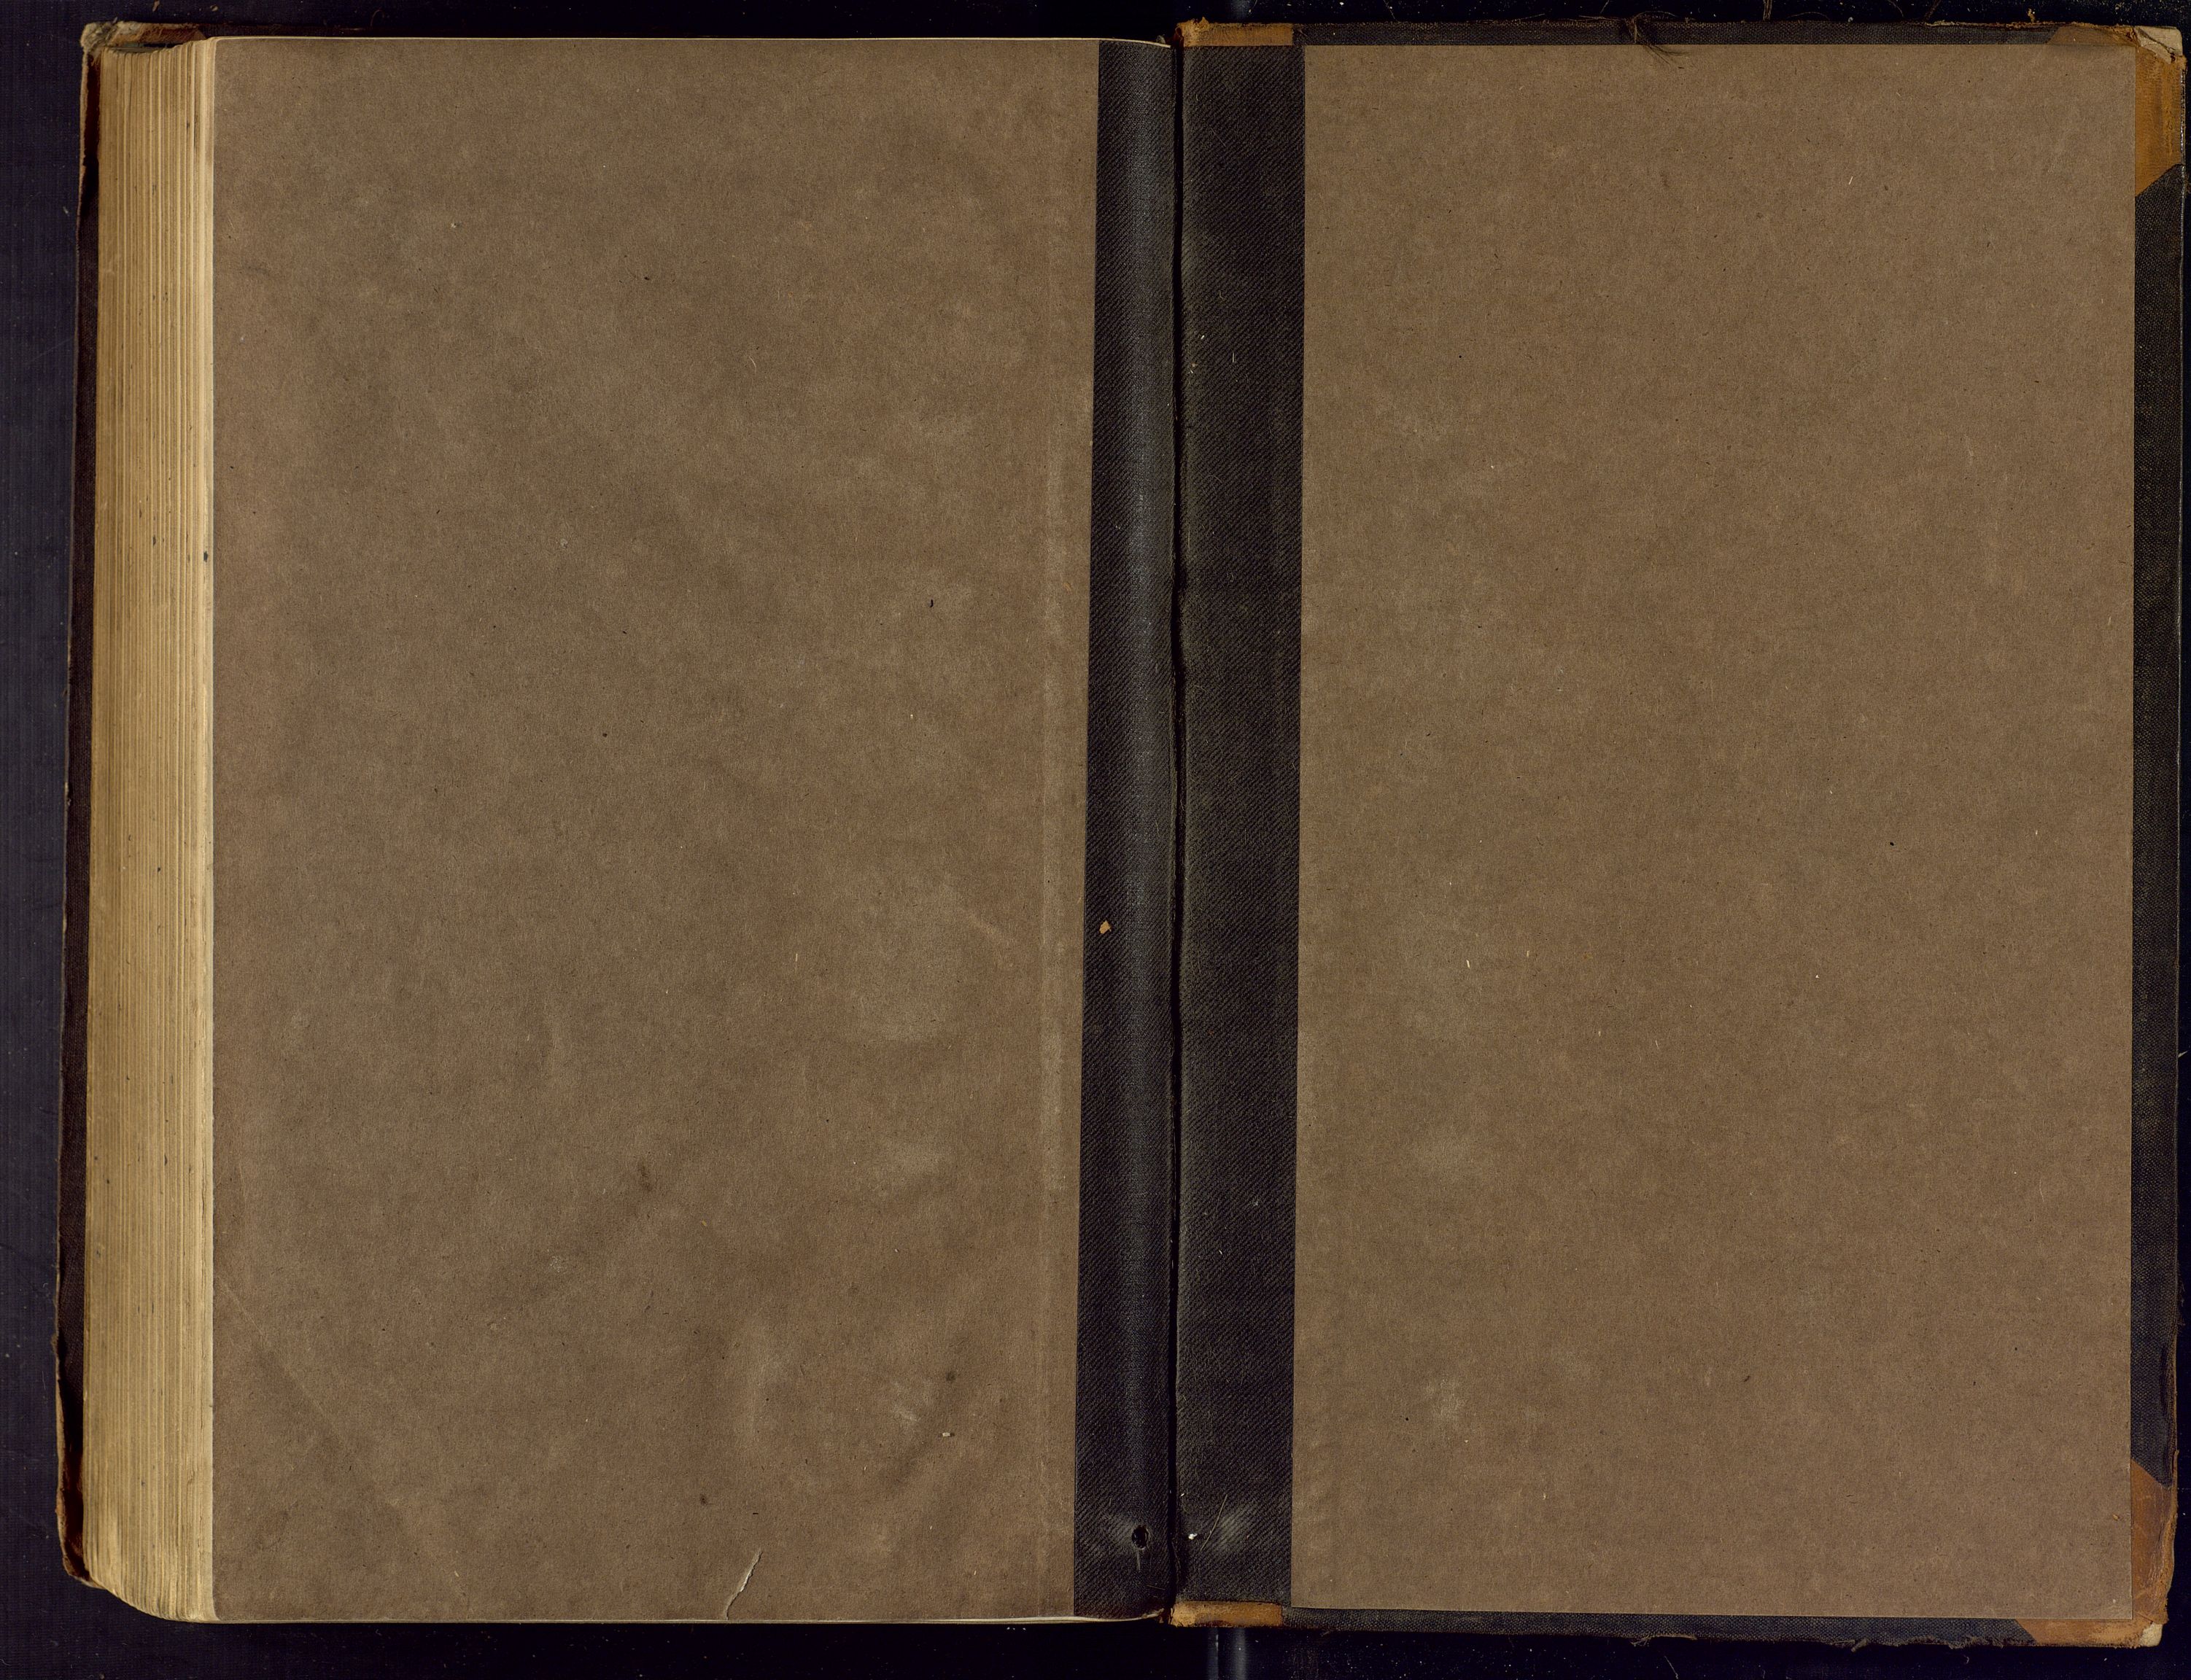 Hallingdal sorenskriveri, SAKO/A-121/F/Fc/L0021: Ekstrarettsprotokoll, 1882-1887